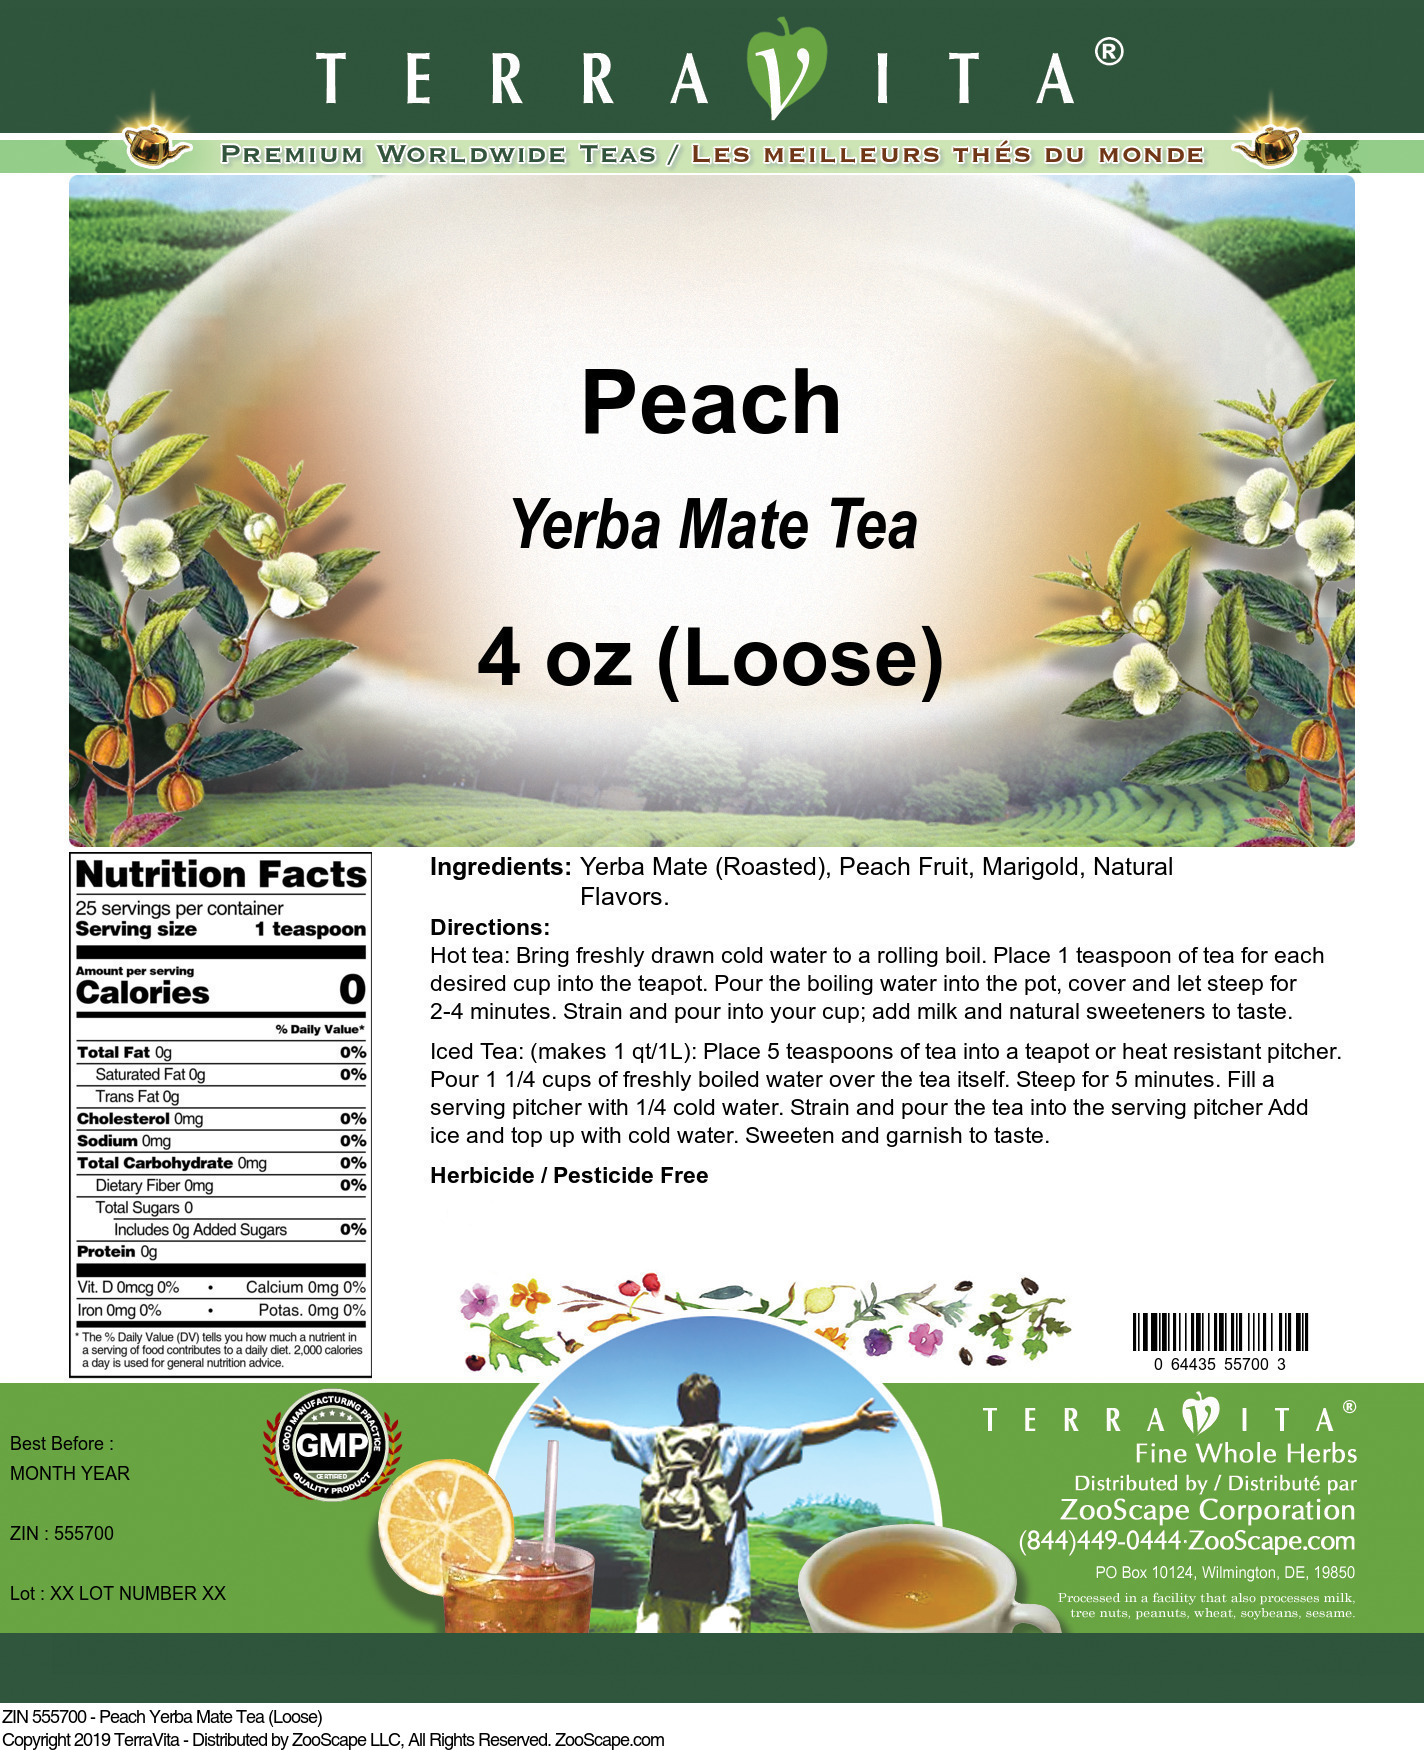 Peach Yerba Mate Tea (Loose) - Label